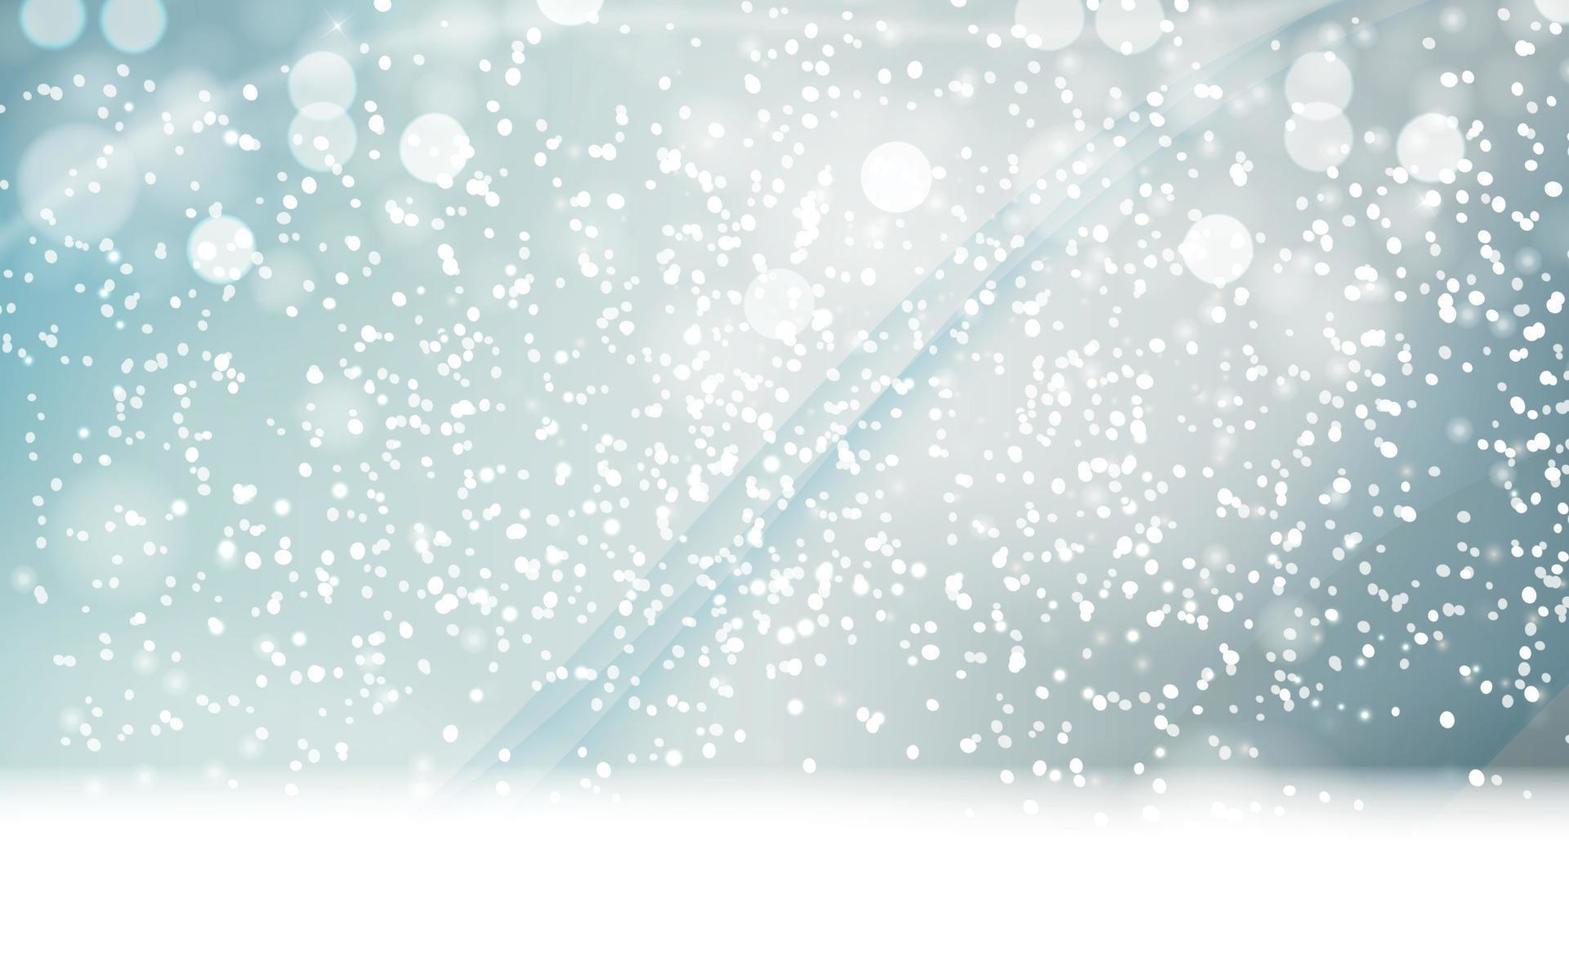 abstrakt vinter snö blå bakgrund vektorillustration vektor